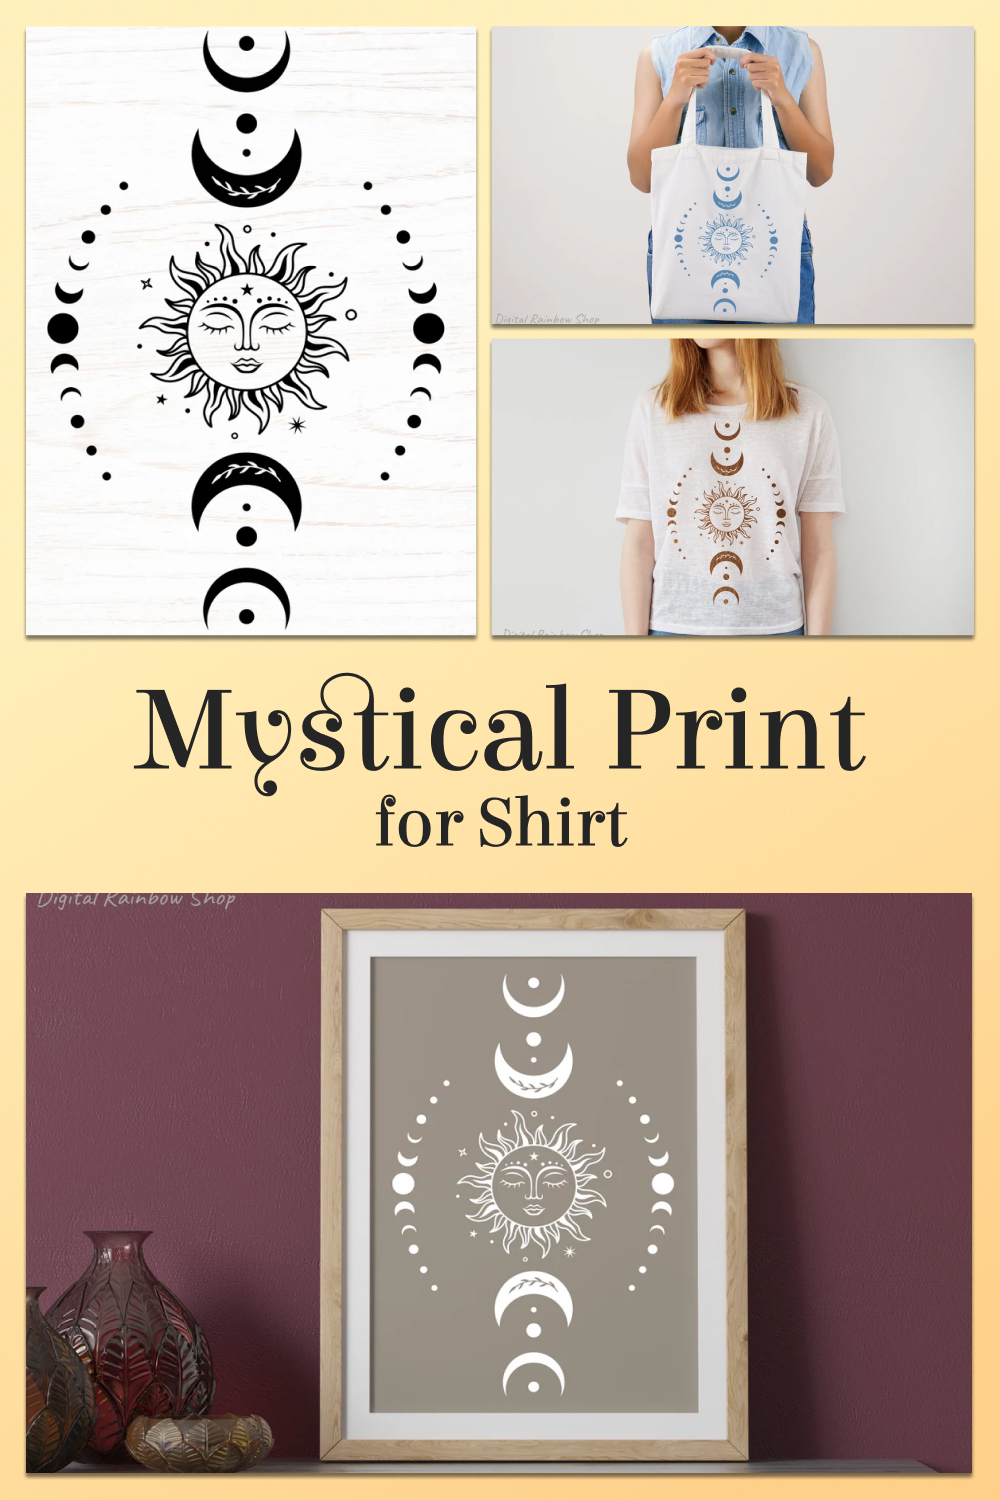 Mystical print for shirt of pinterest.